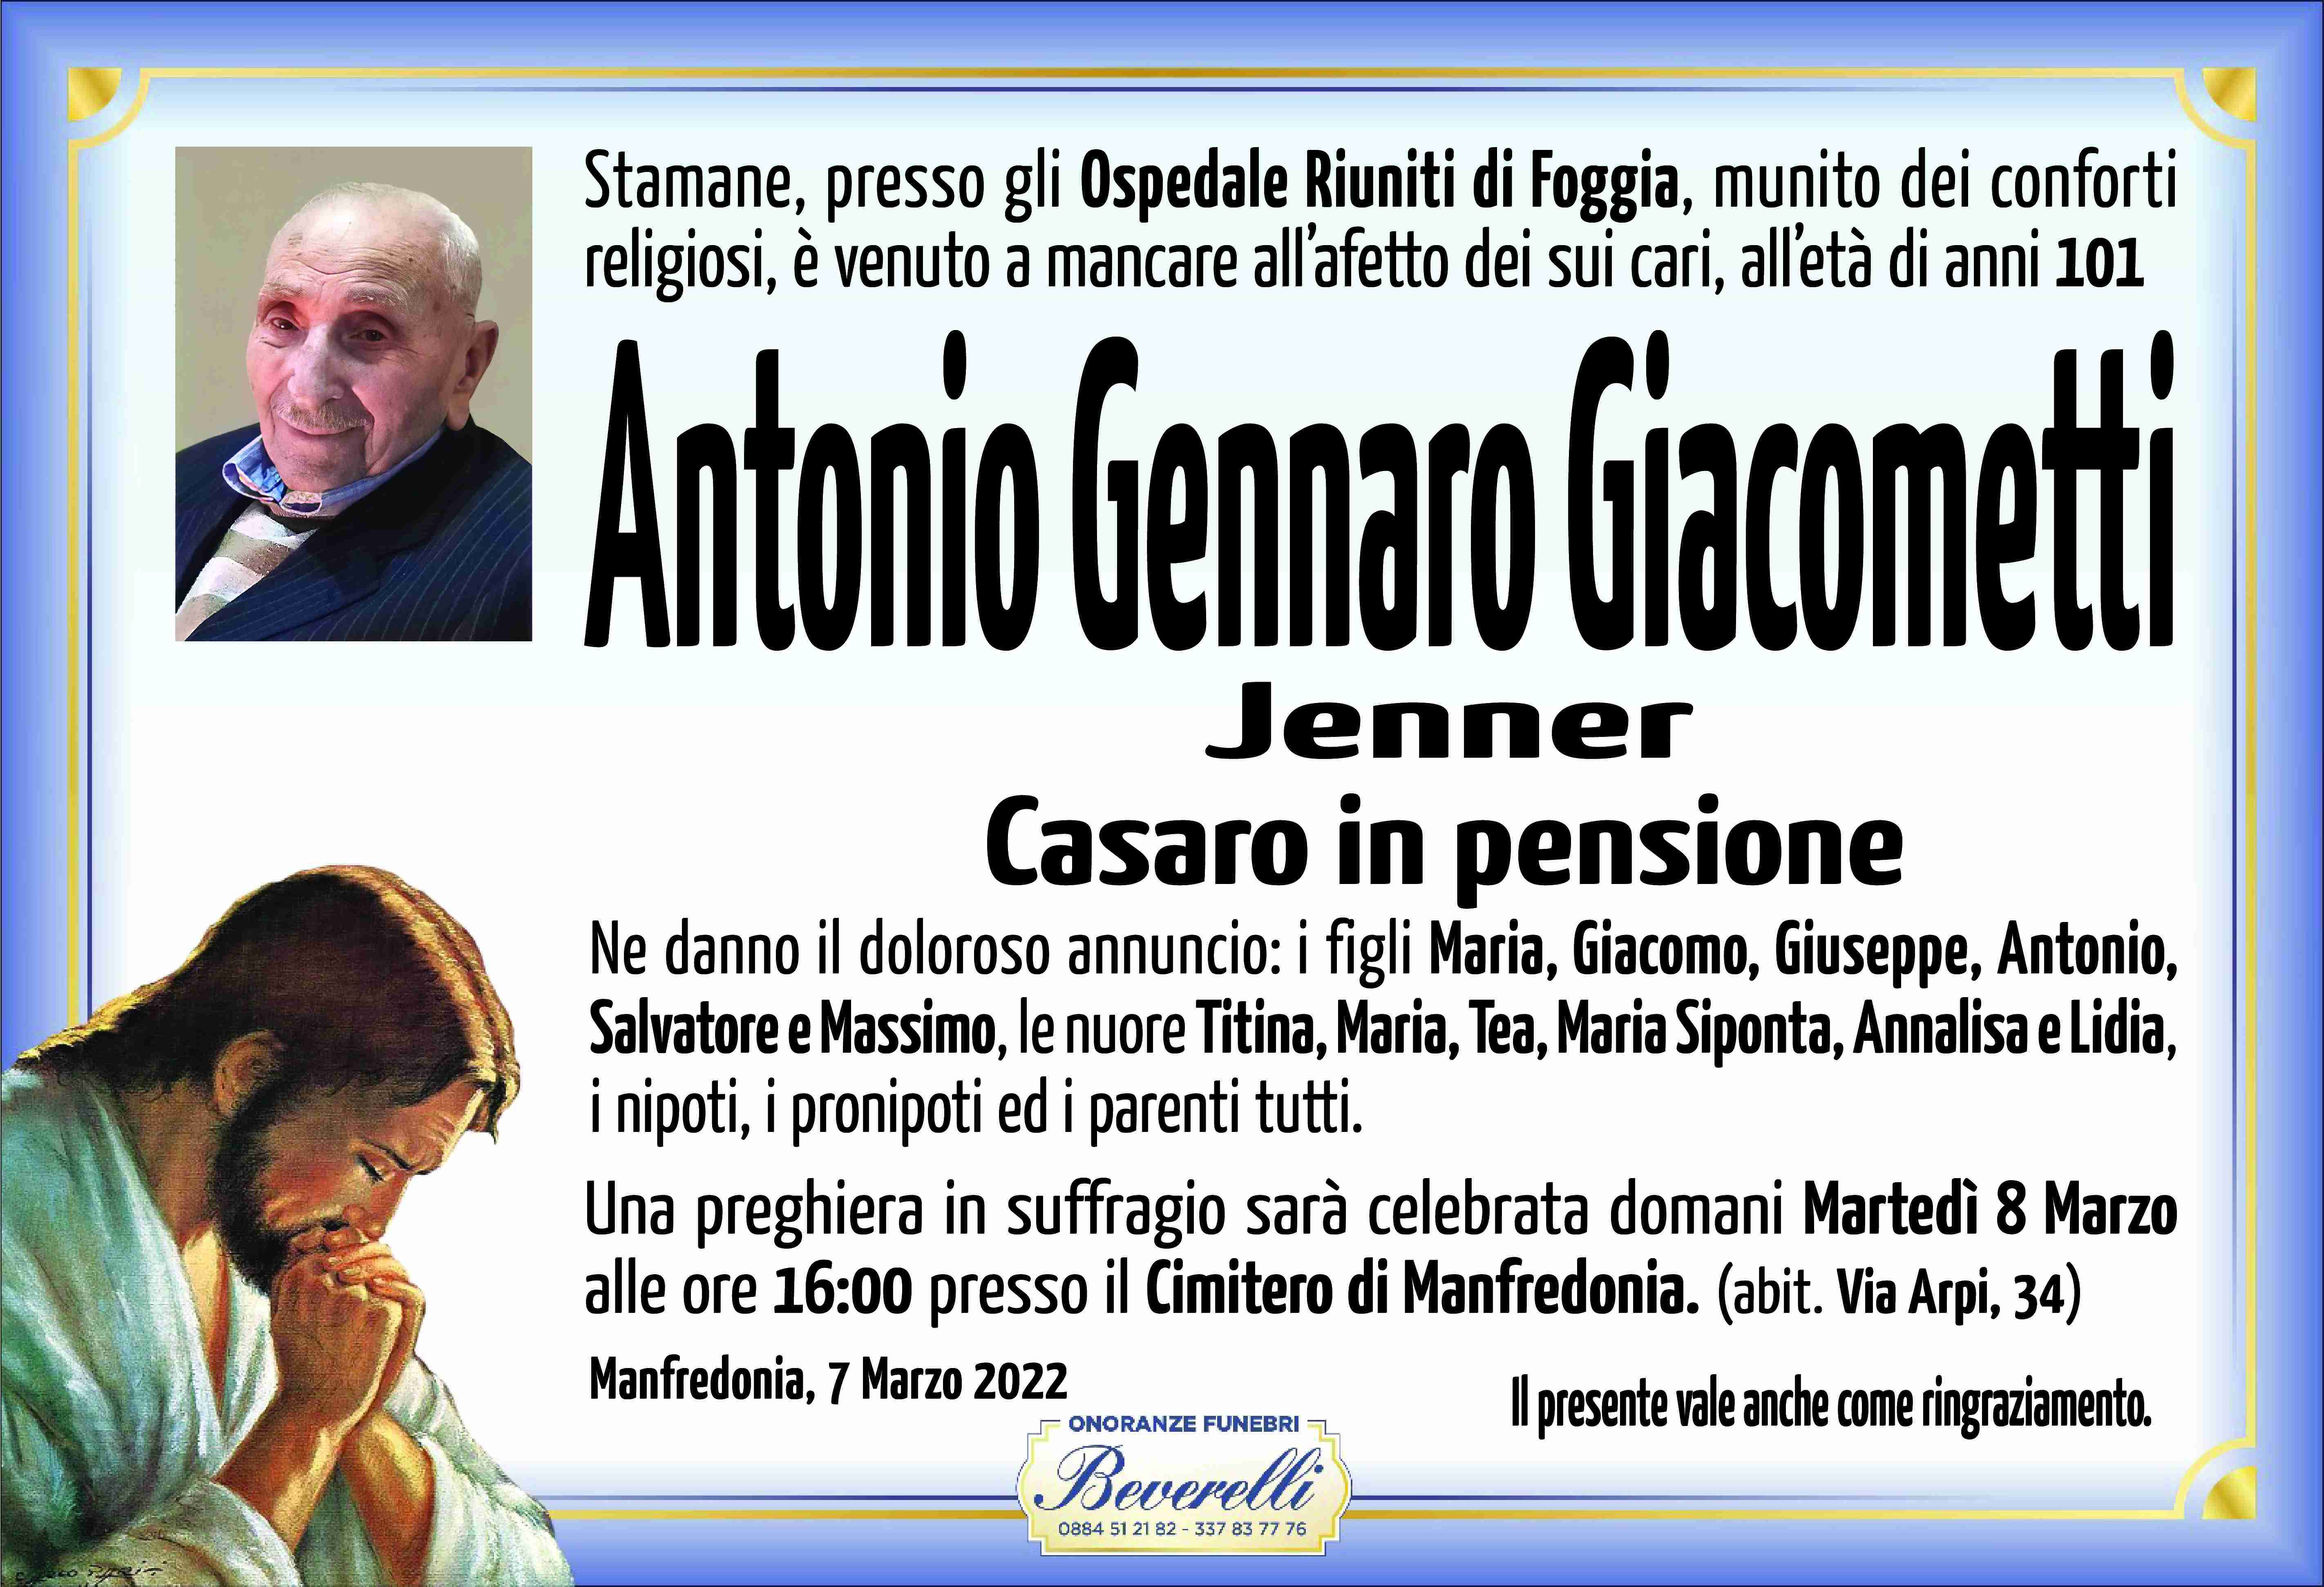 Antonio Gennaro Giacometti